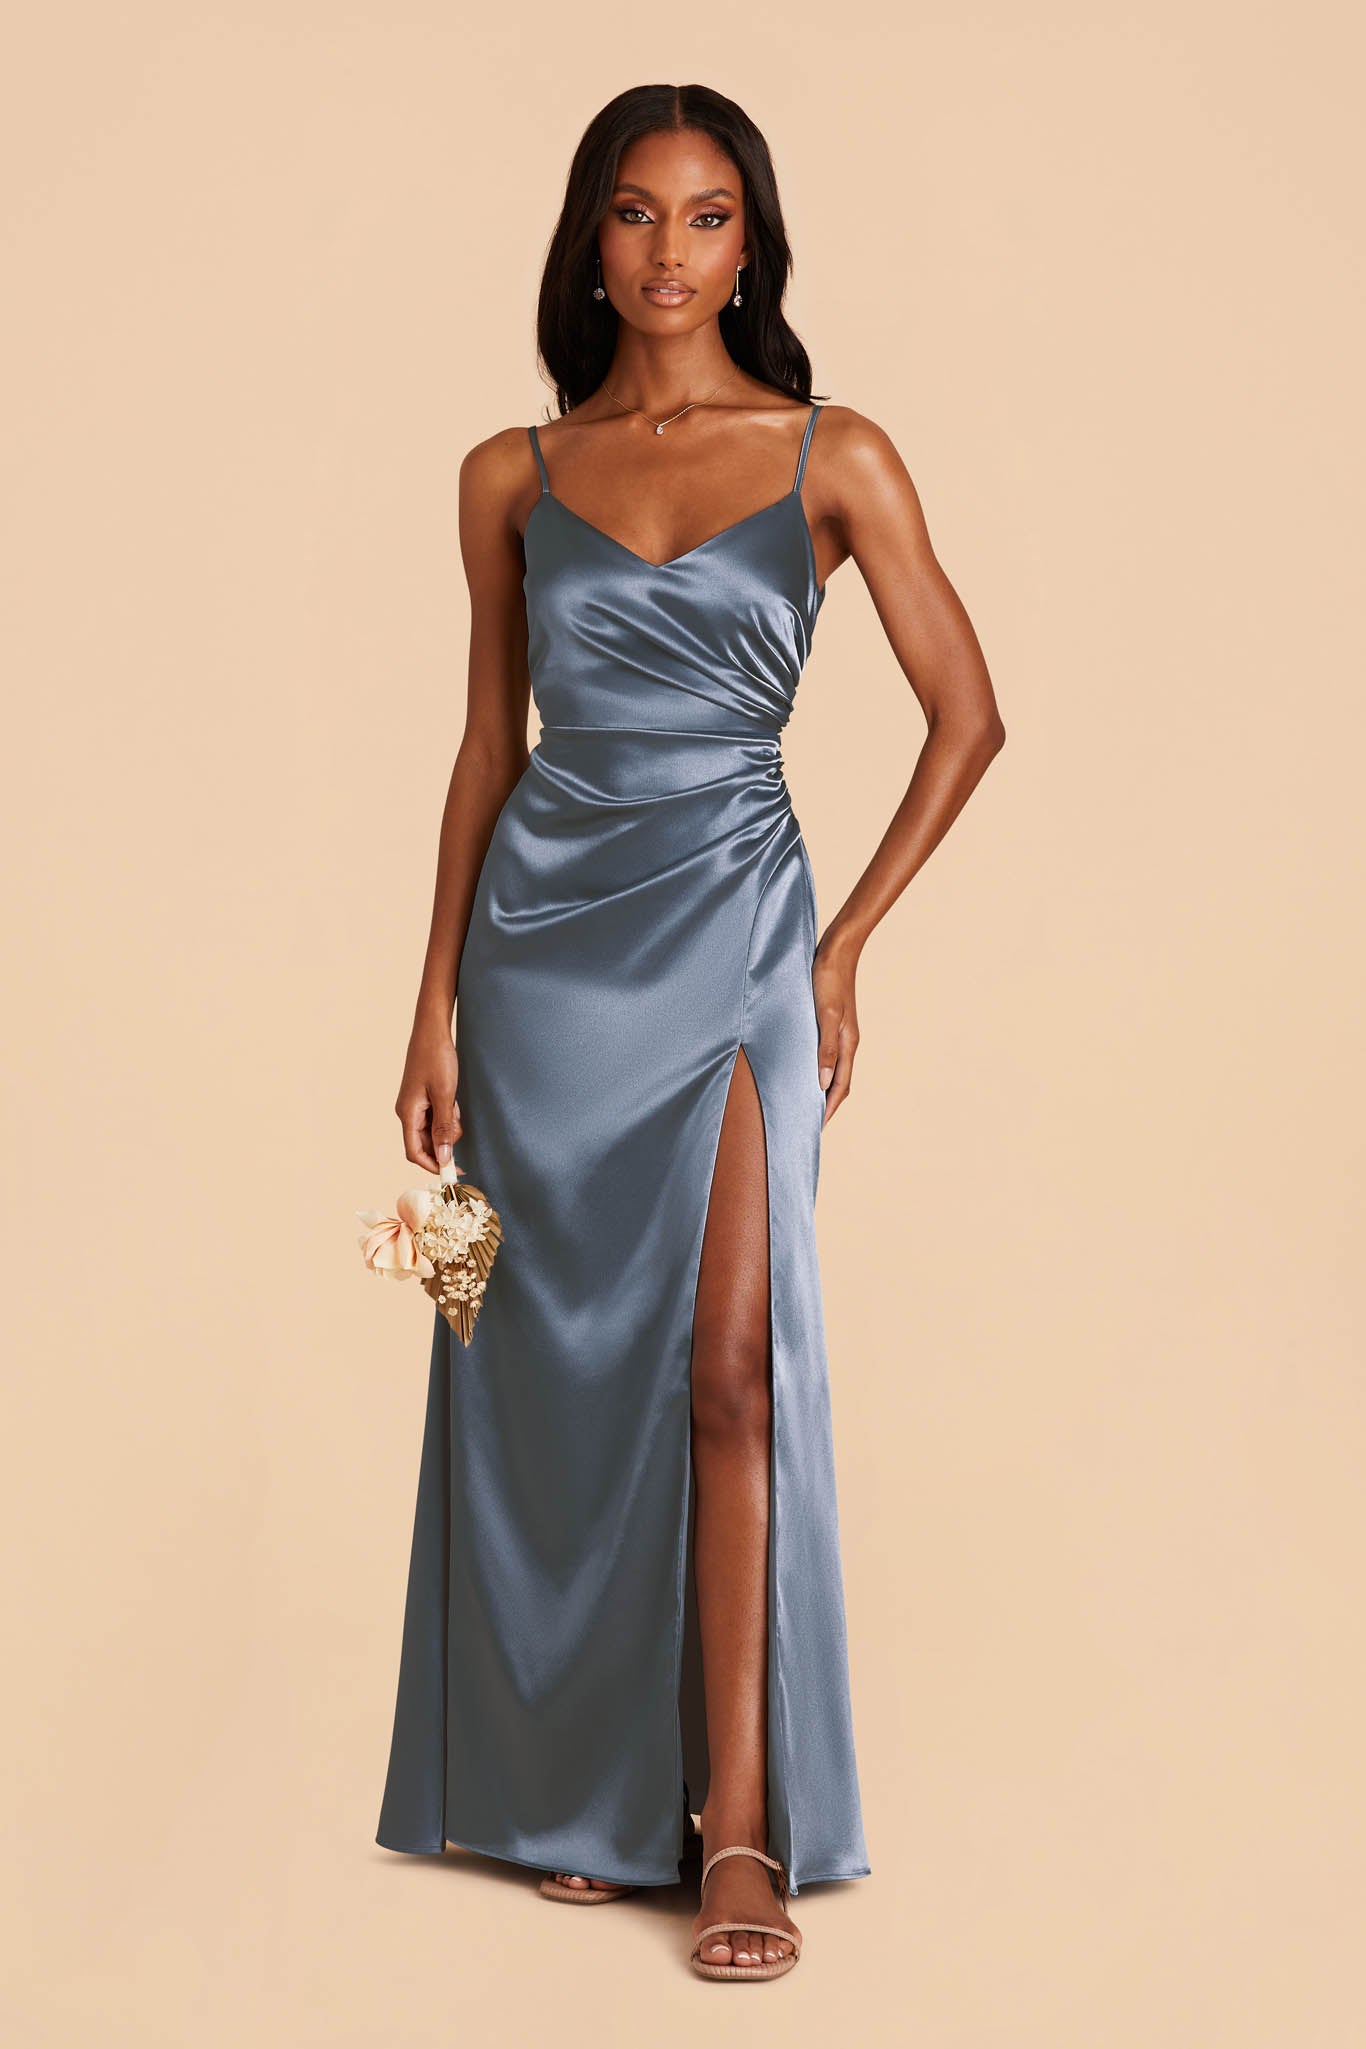 Elevated Romance Navy Blue Satin Asymmetrical Maxi Slip Dress